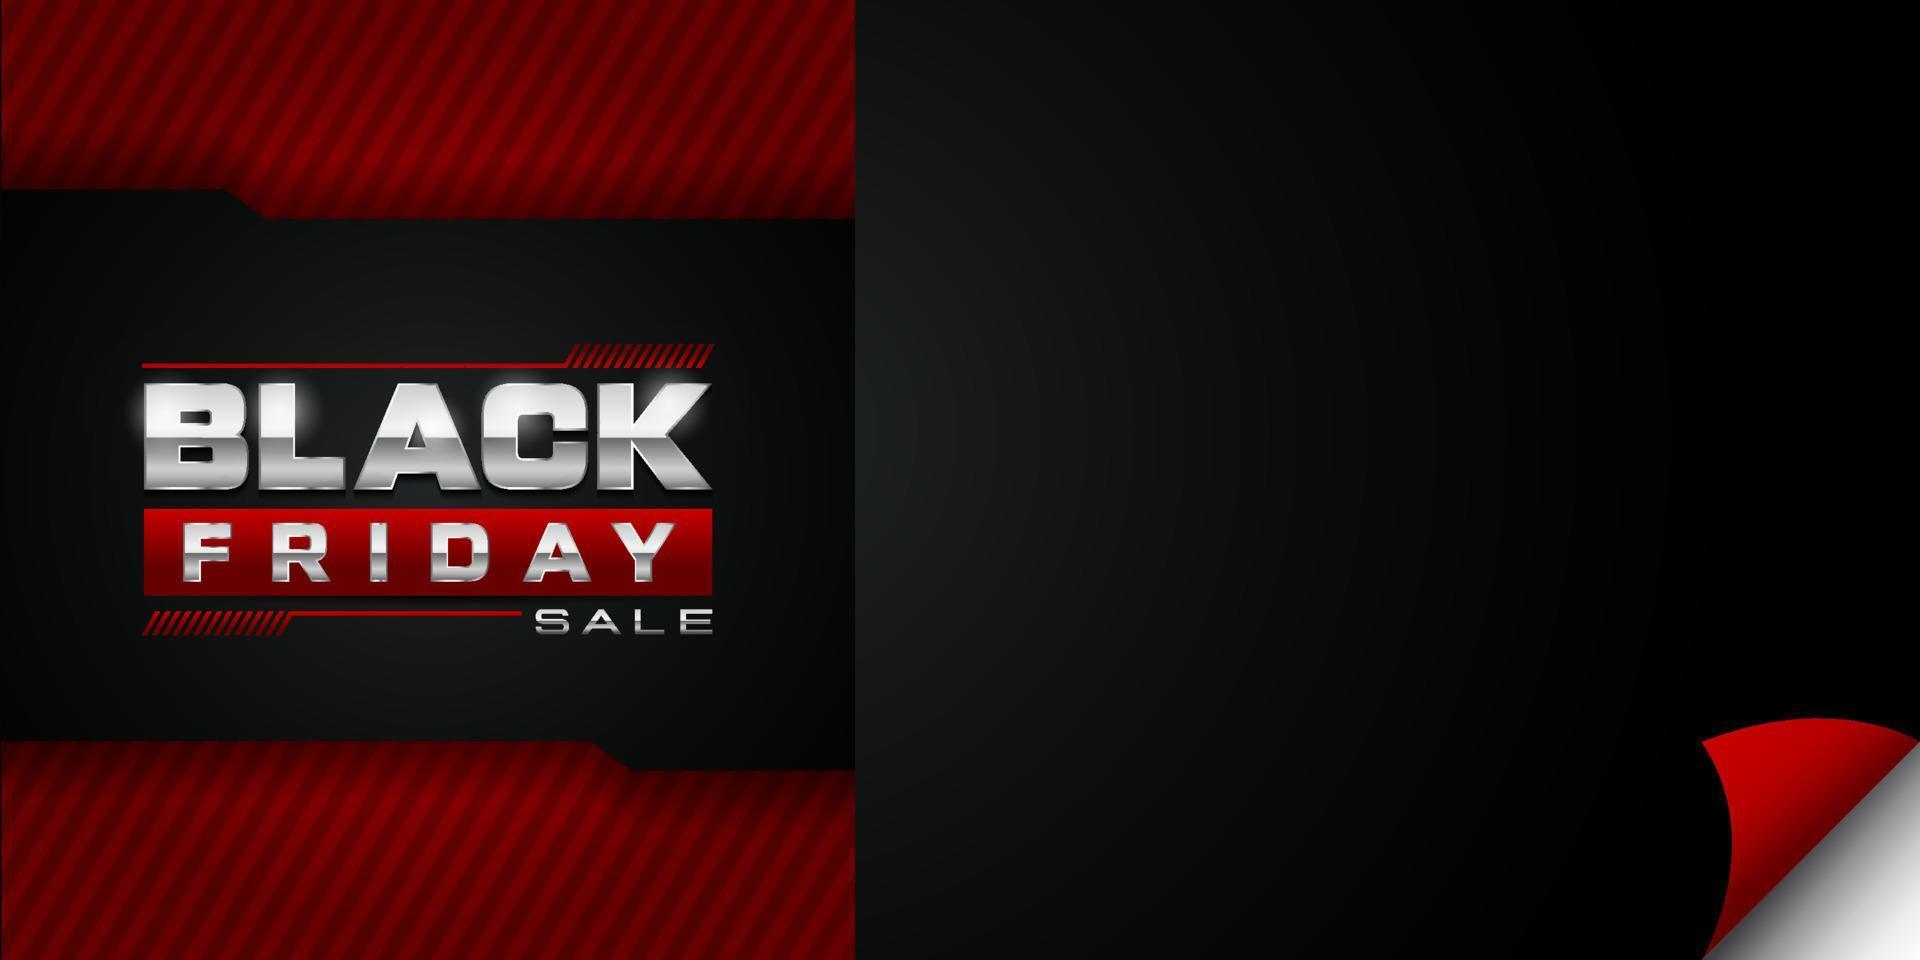 Black friday sale banner template for media promotion vector